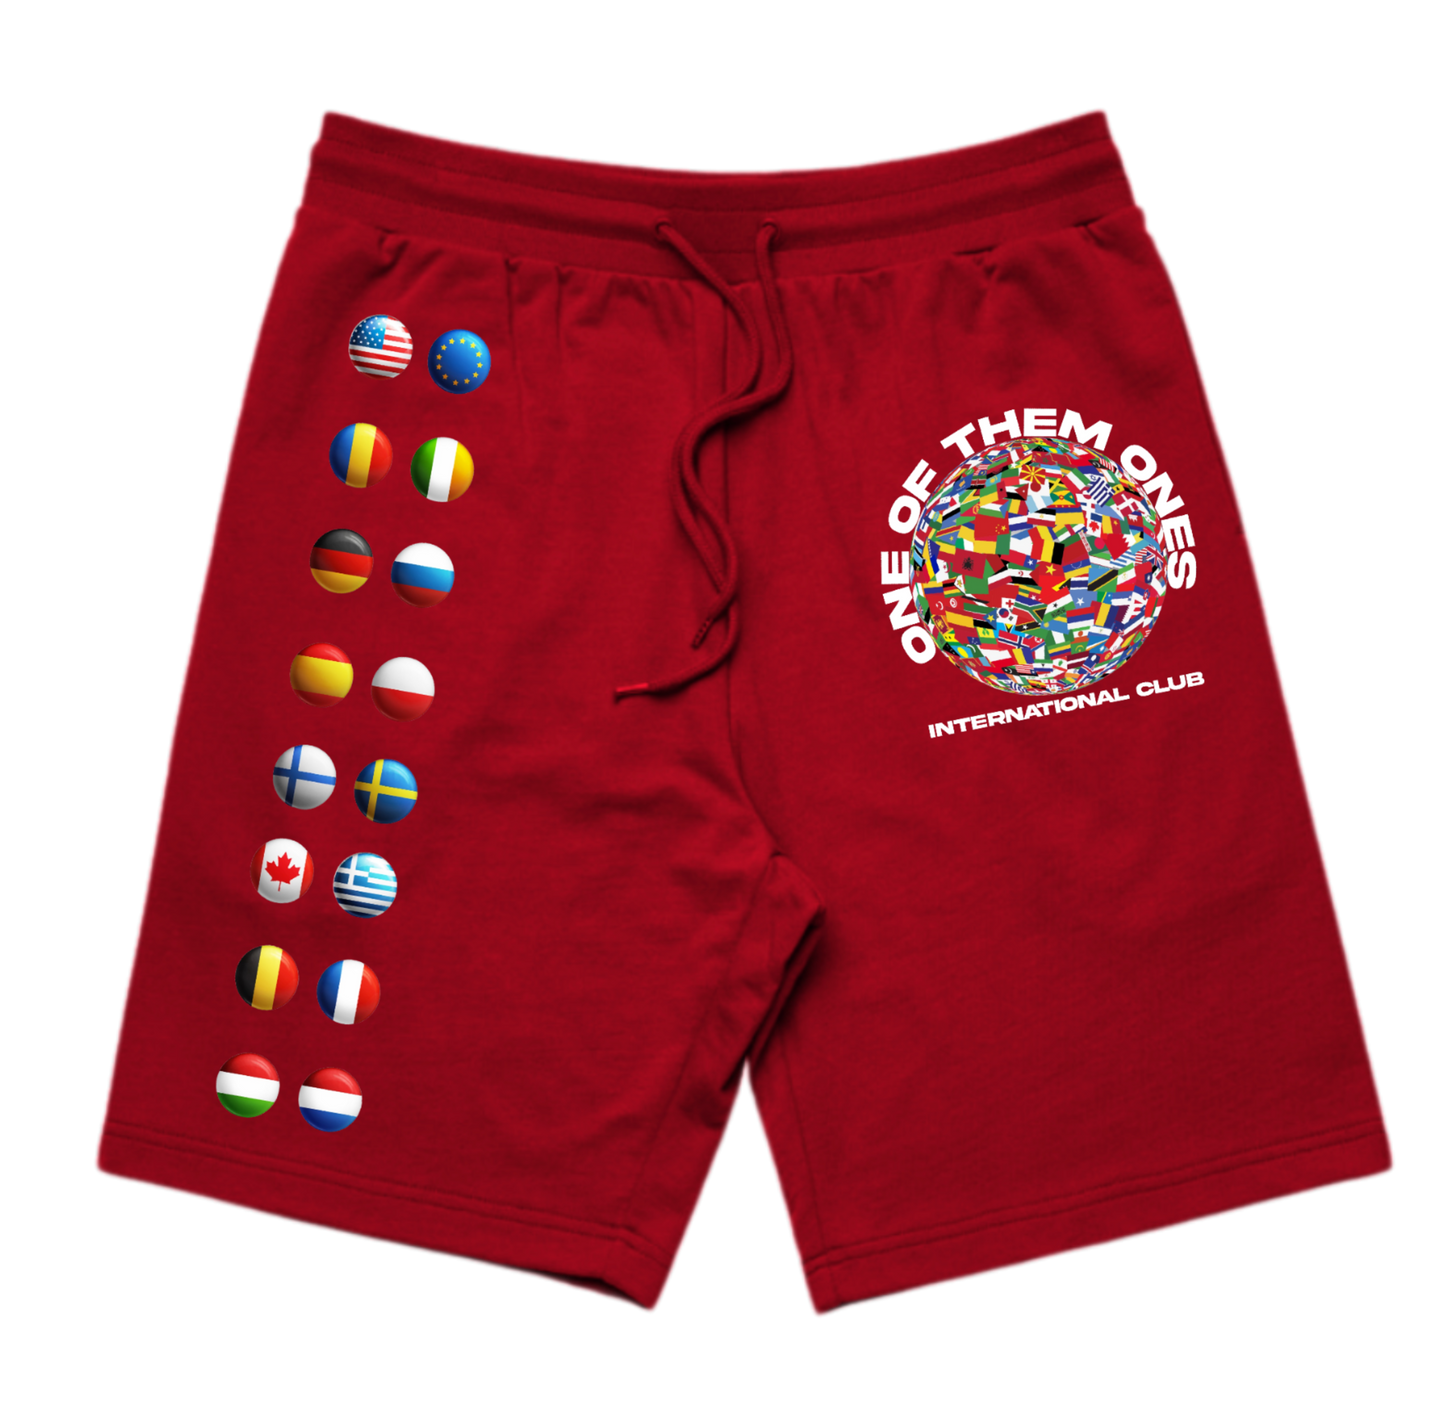 Organik Lyfestyle - 1OFTHEM1's International Club - Red Shorts